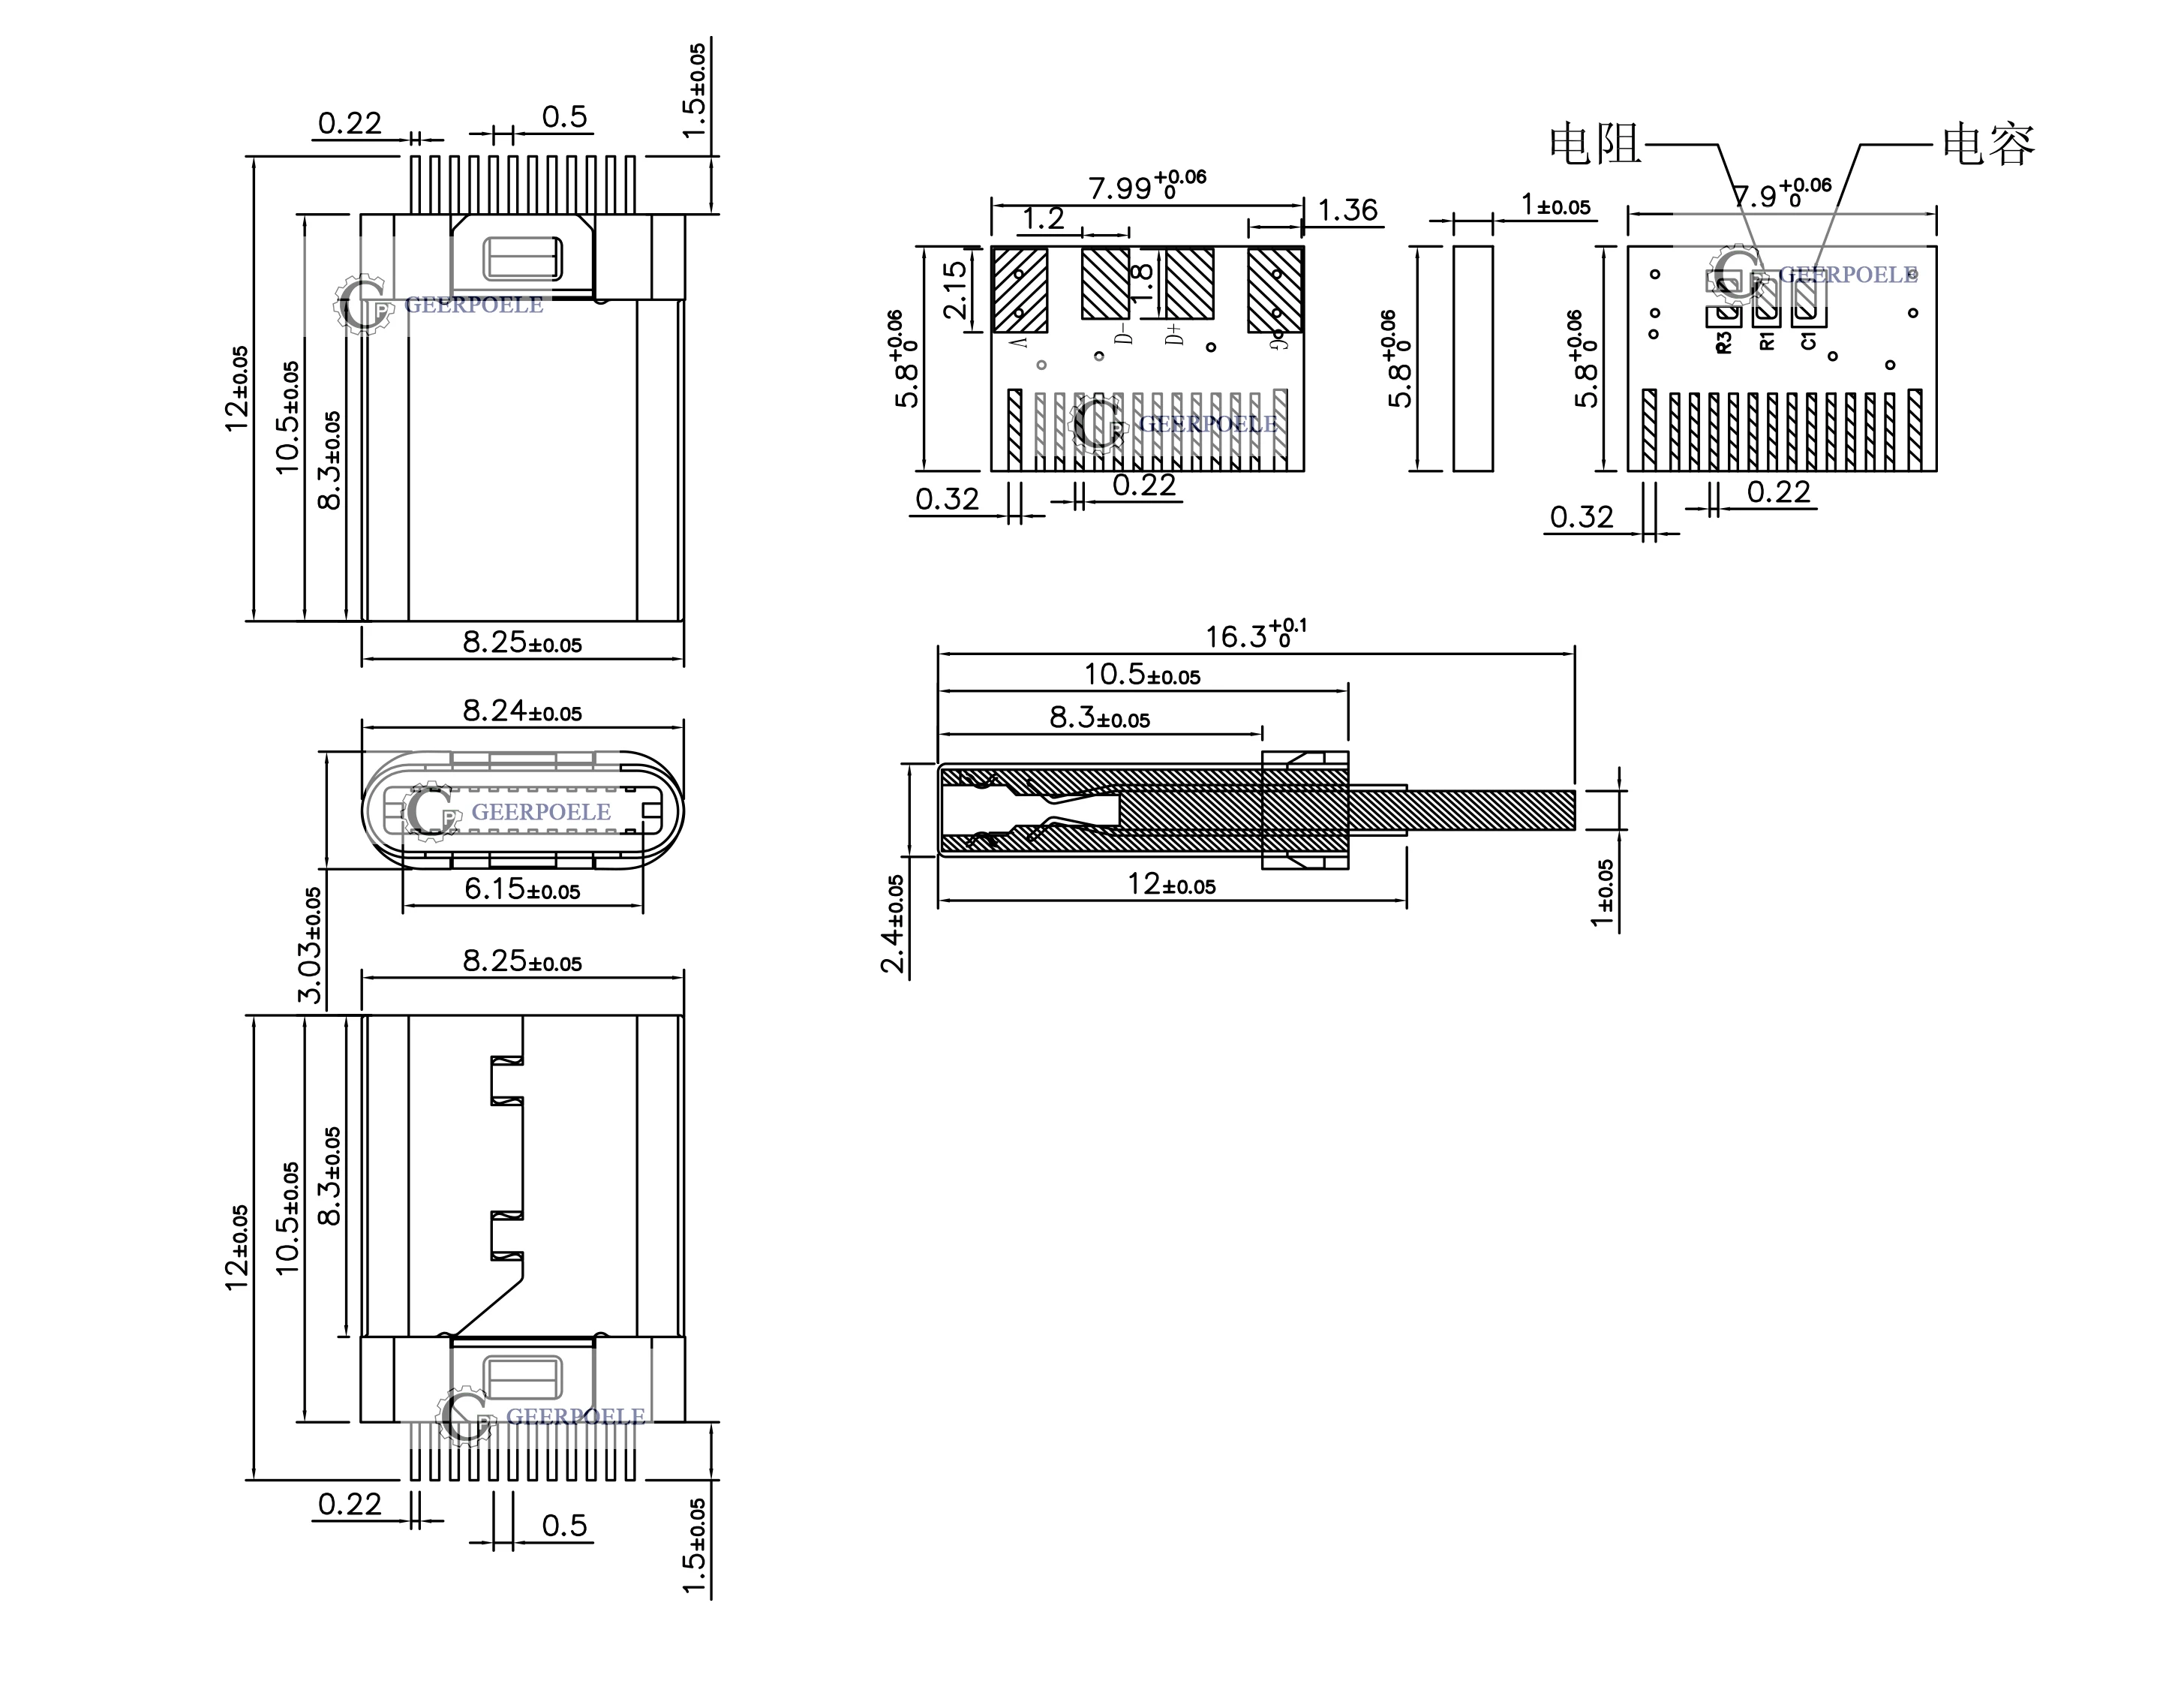 50 kos/veliko Tipa C 24P Priključki Plug Micro USB Moški Set Primeru Conector Pcb Connettori Elettrici Telefon Prise Enchufes